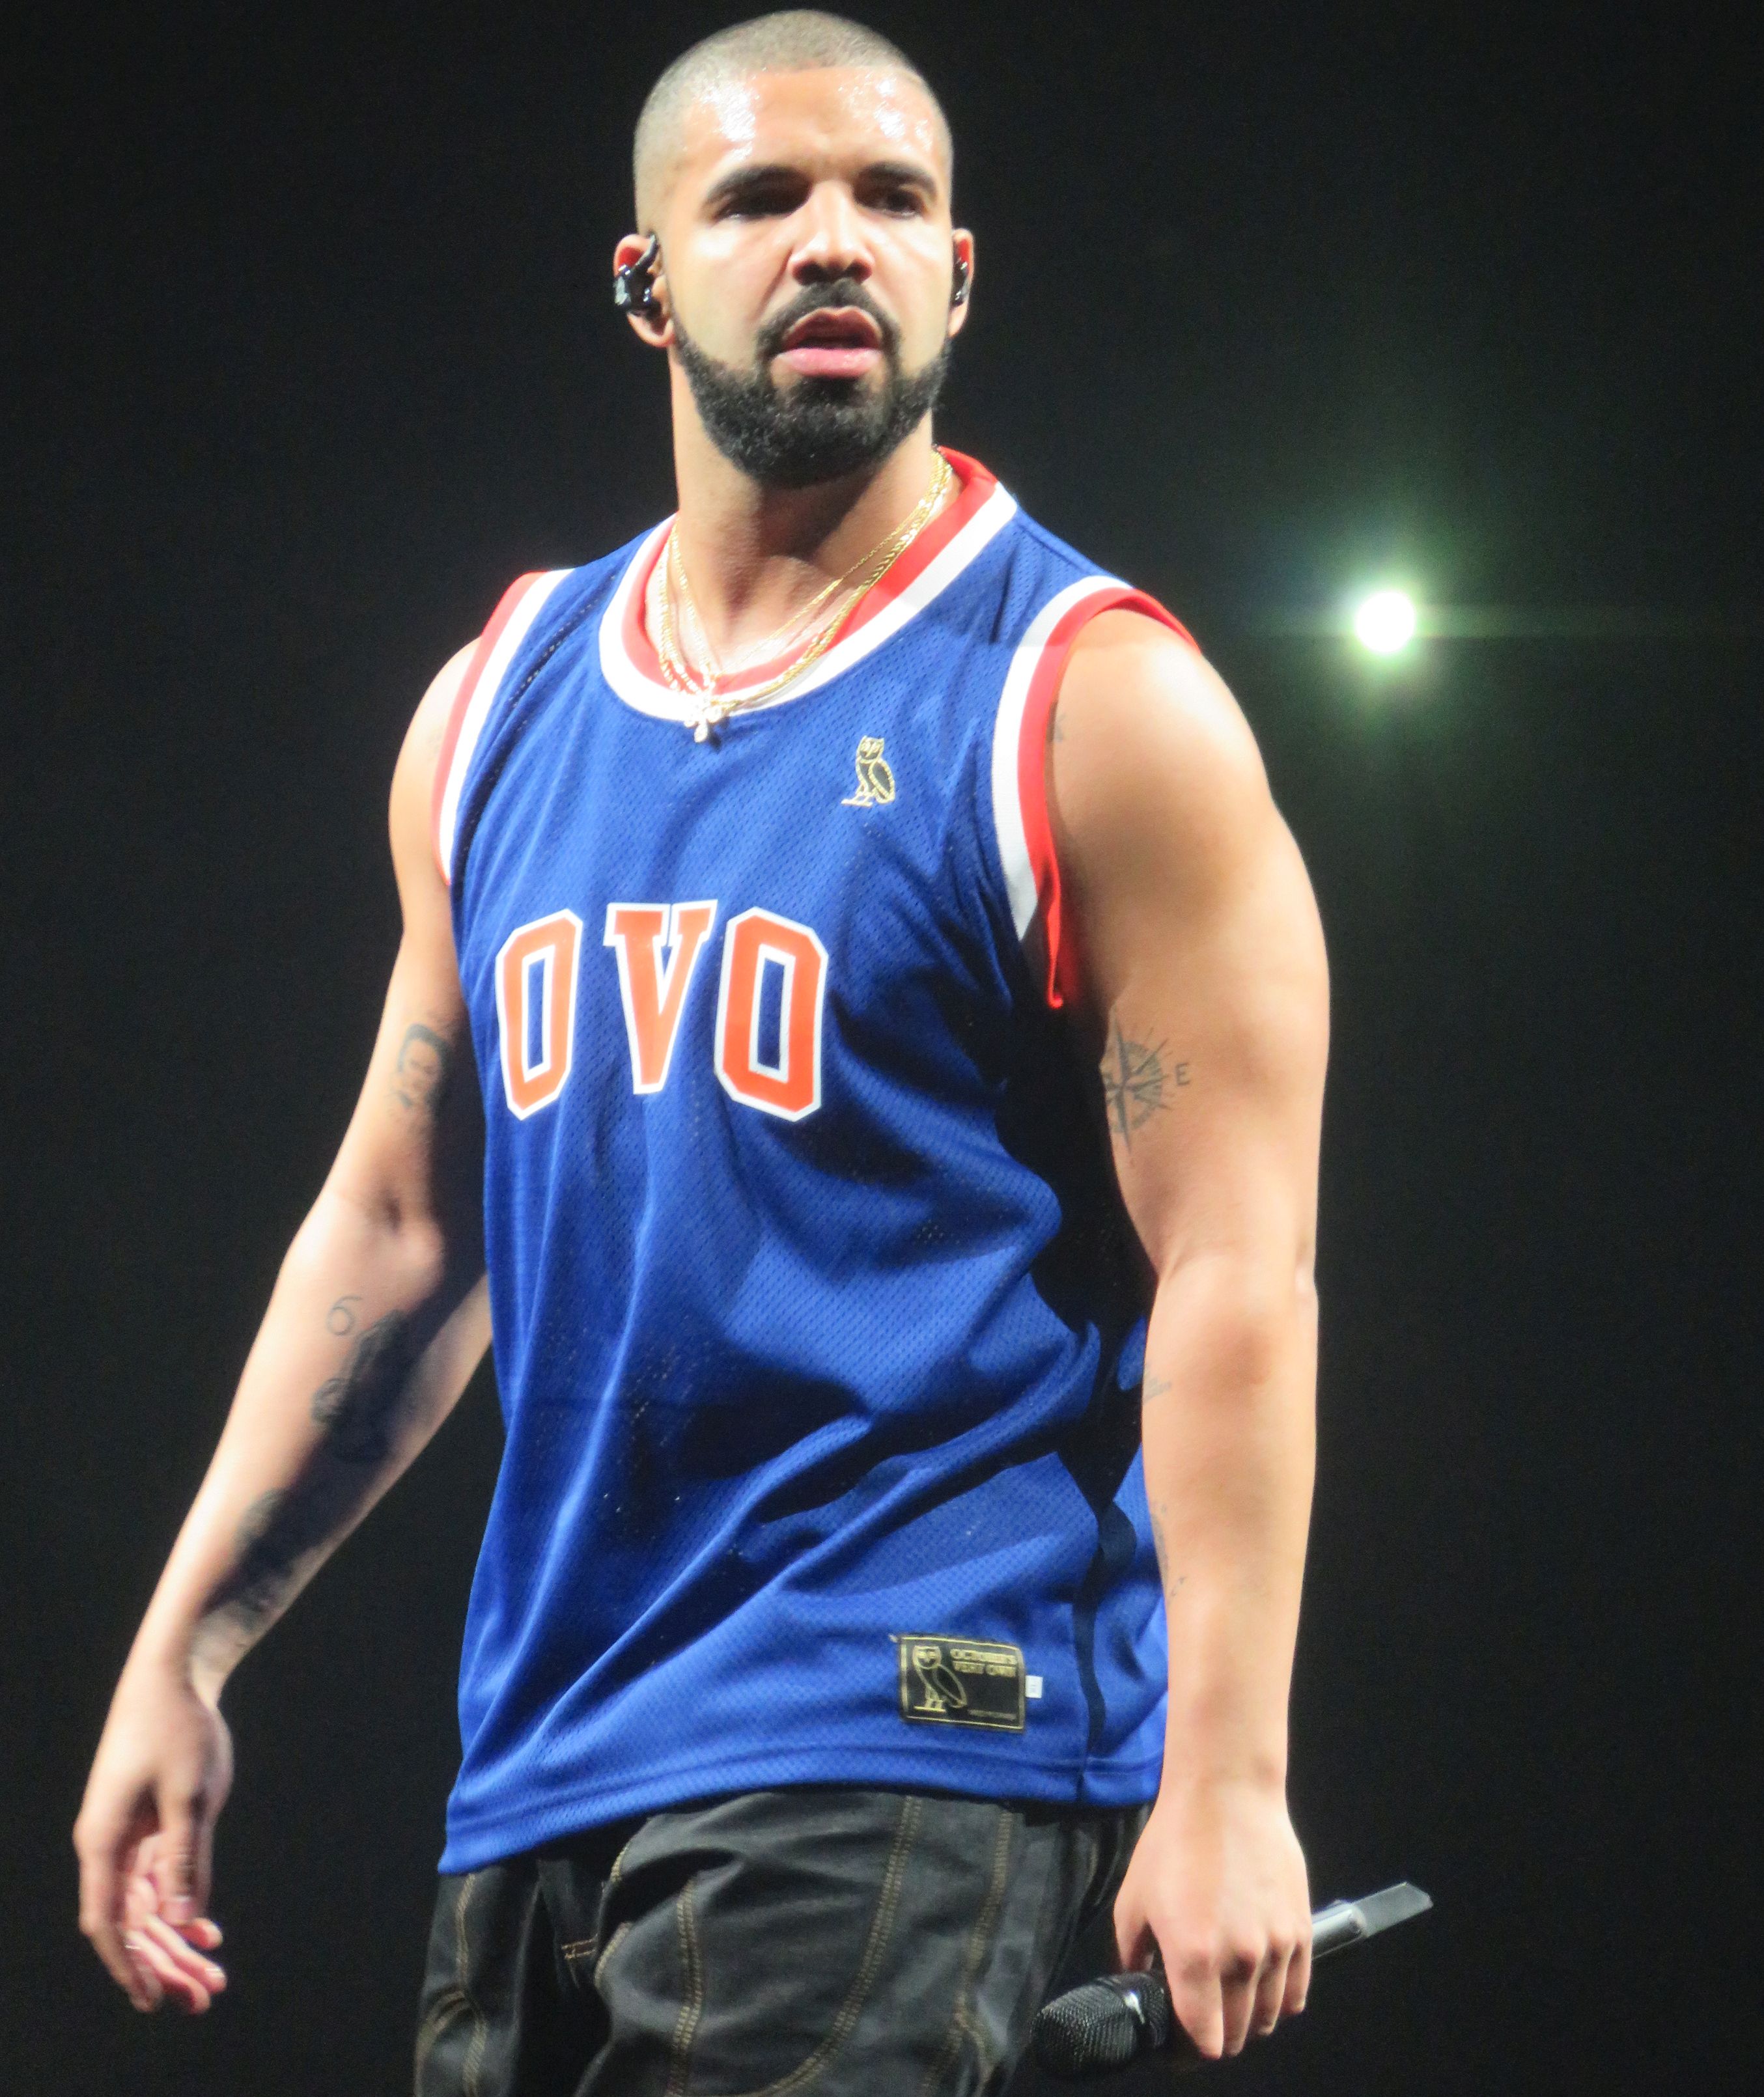 Drake got a little fired up too (Photo credit: Splash News)